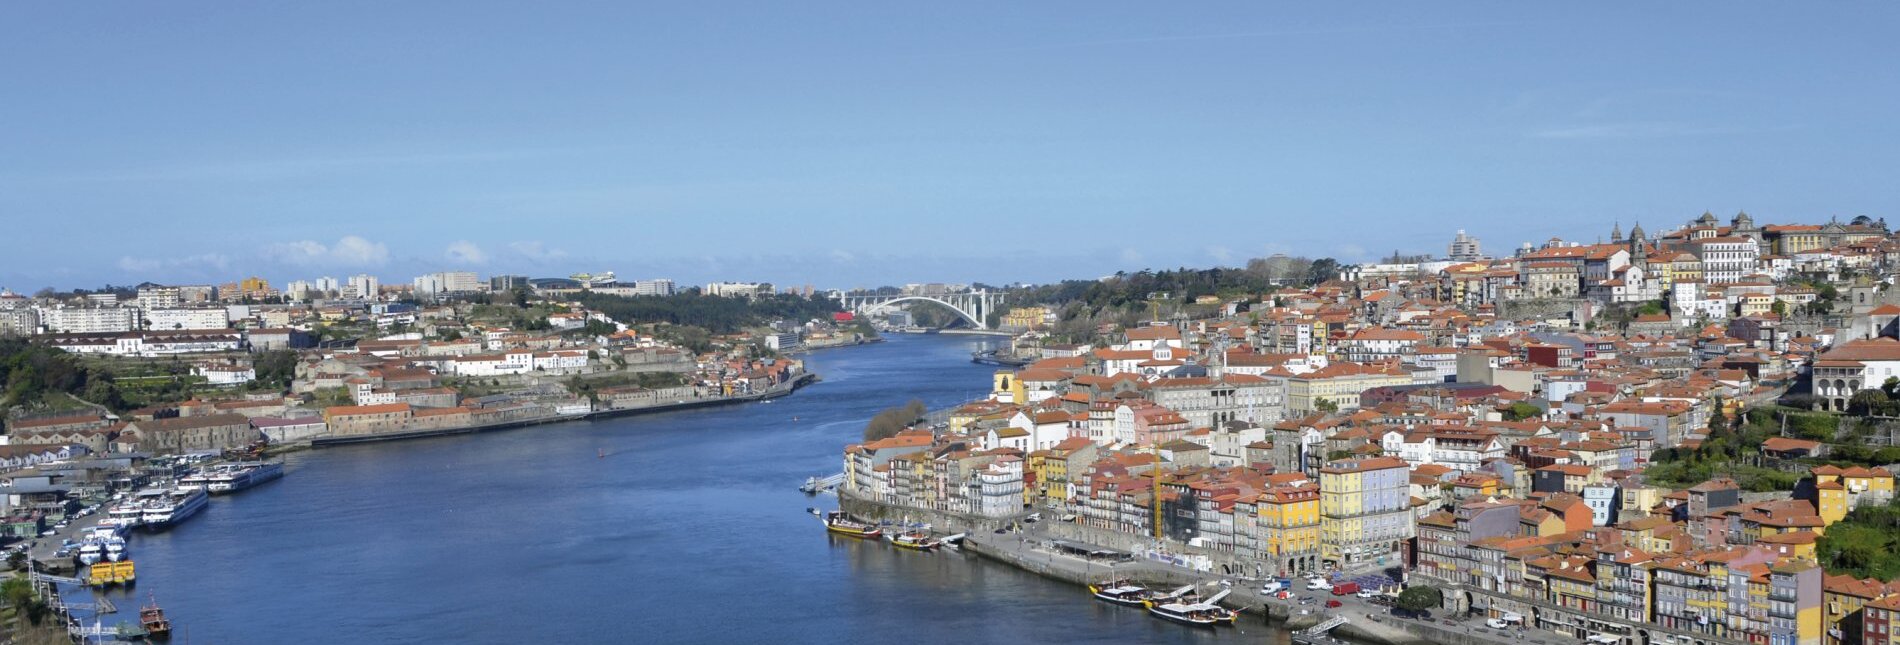 Blick über den Douro auf Portos Altstadt